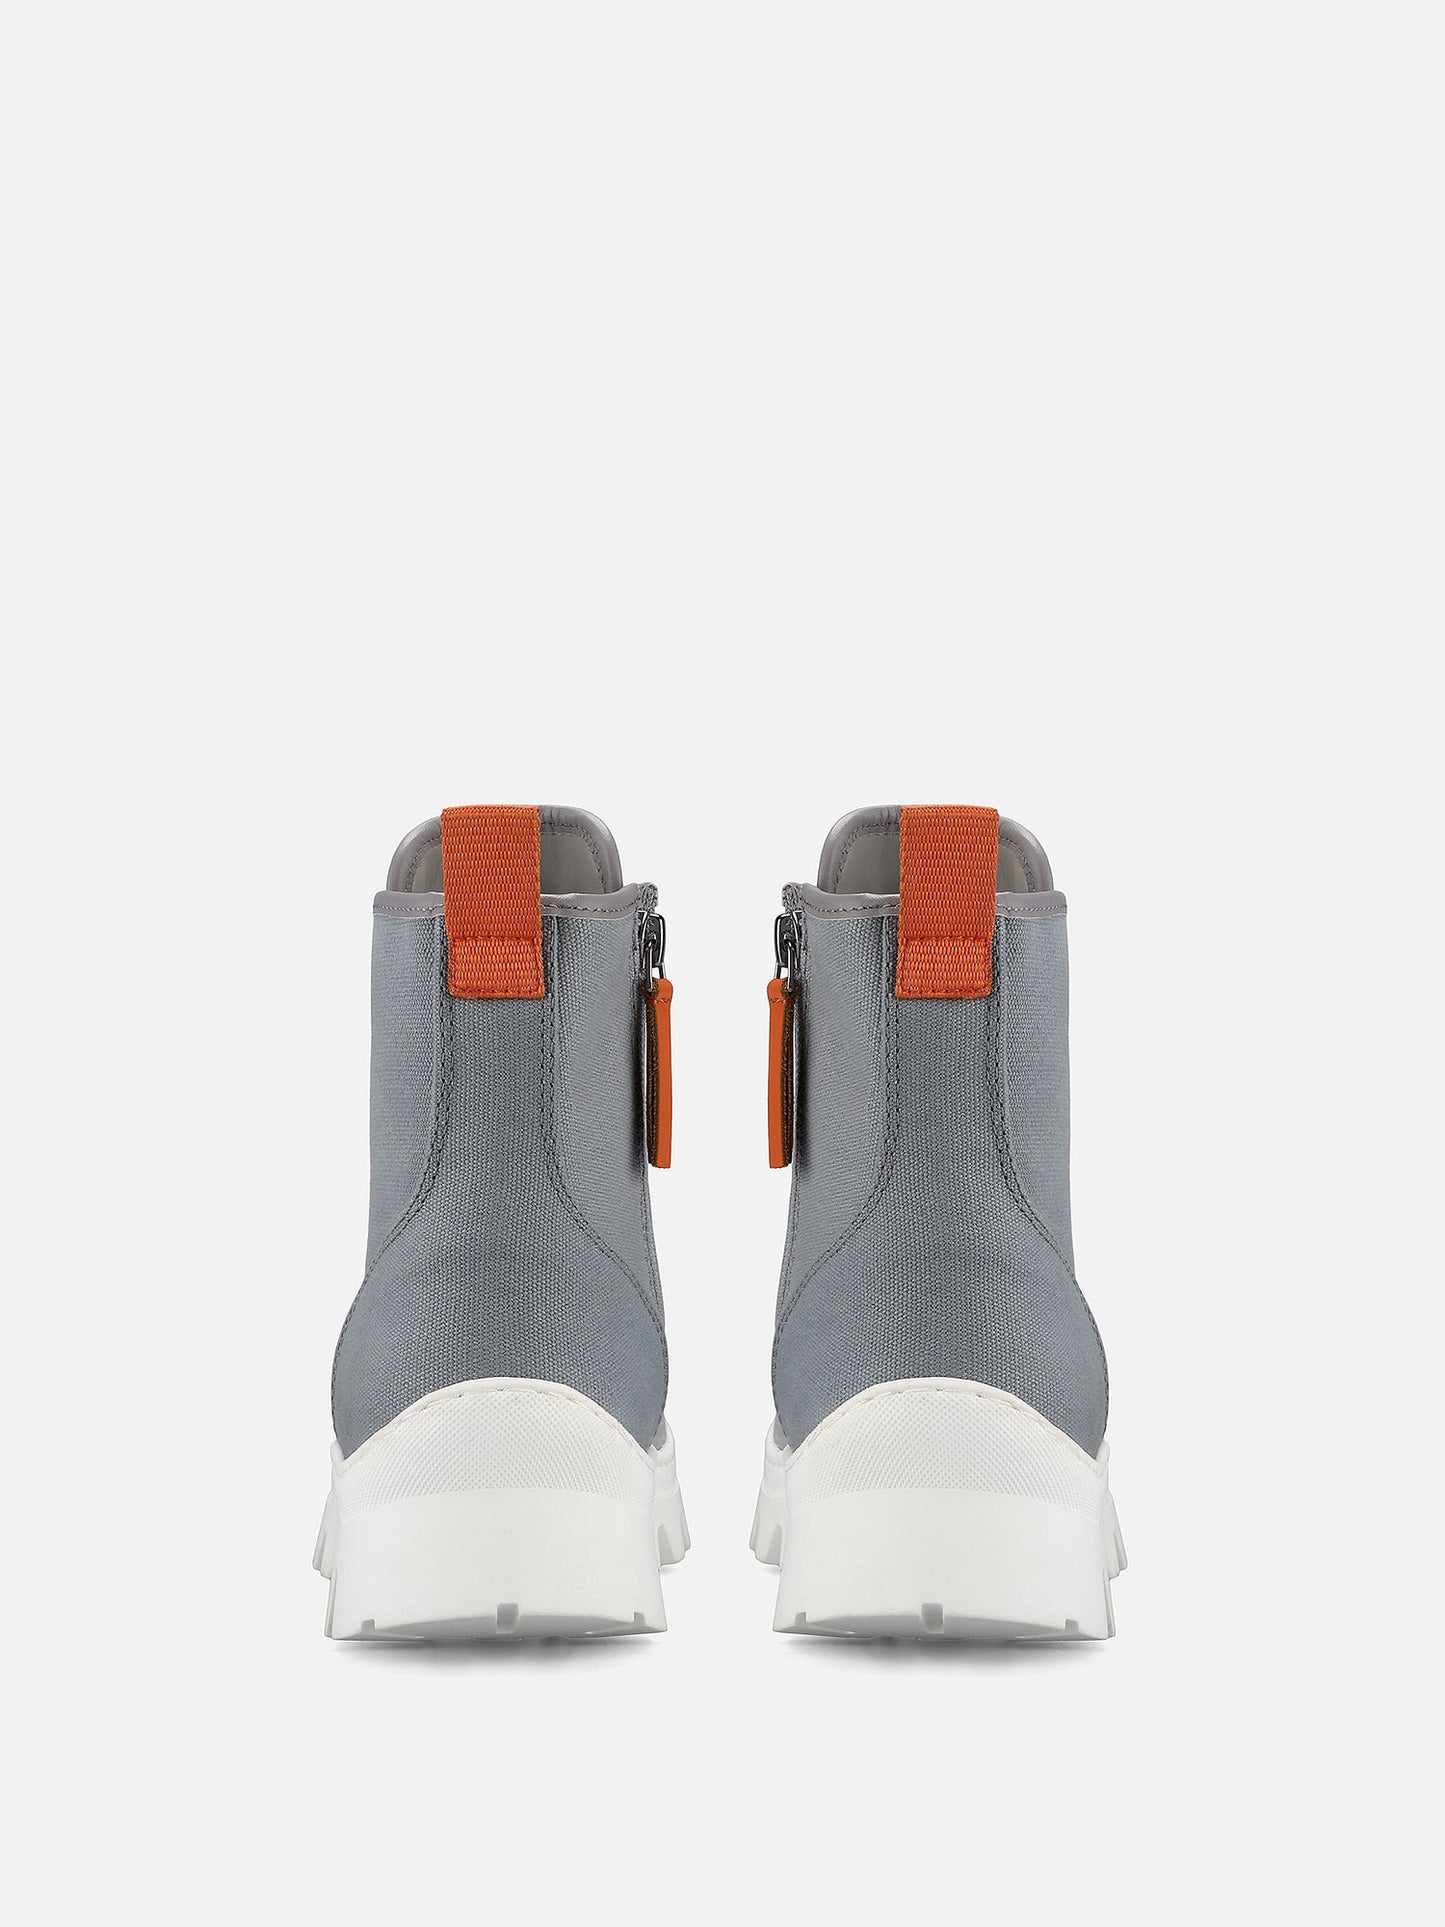 TUAREGE Canva Boots - Grey